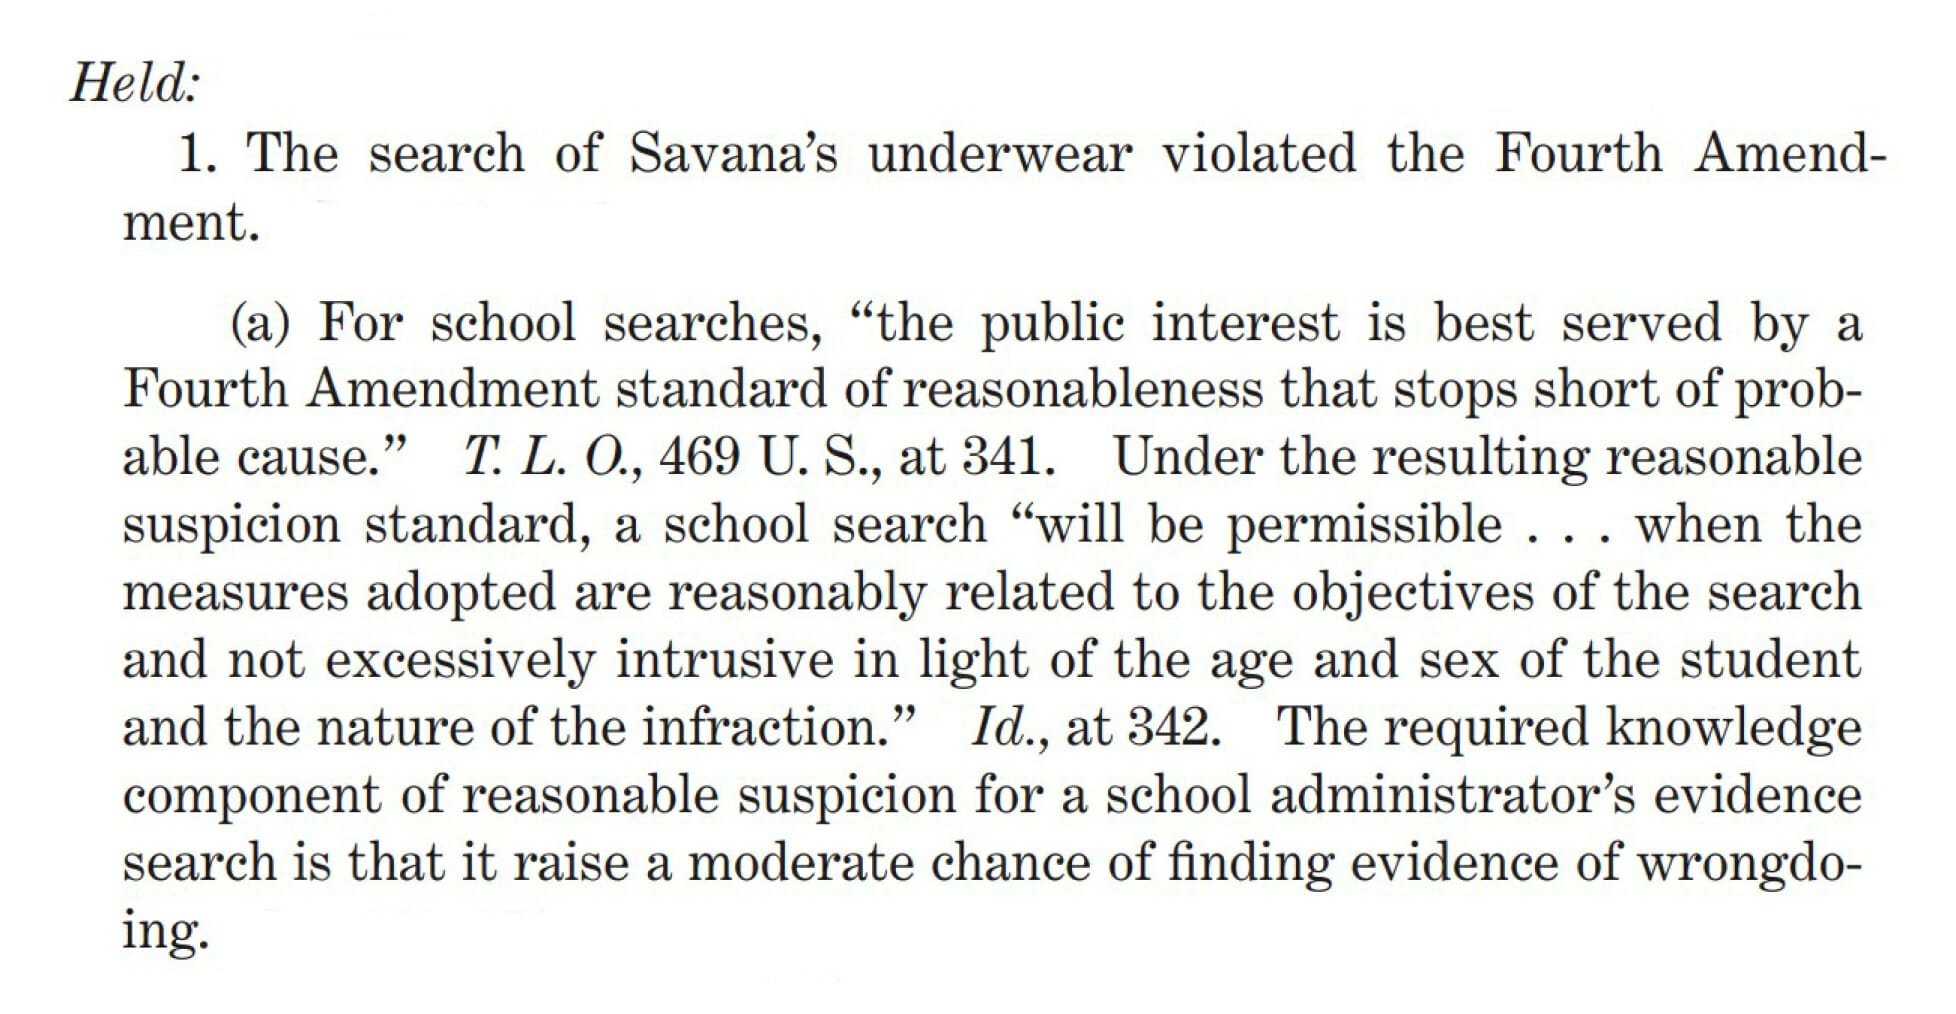 Safford Unified School Dist. #1 v. Redding 557 U.S. 364 (2009). Library of Congress U.S. Reports,   https://www.loc.gov/item/usrep557364/.   